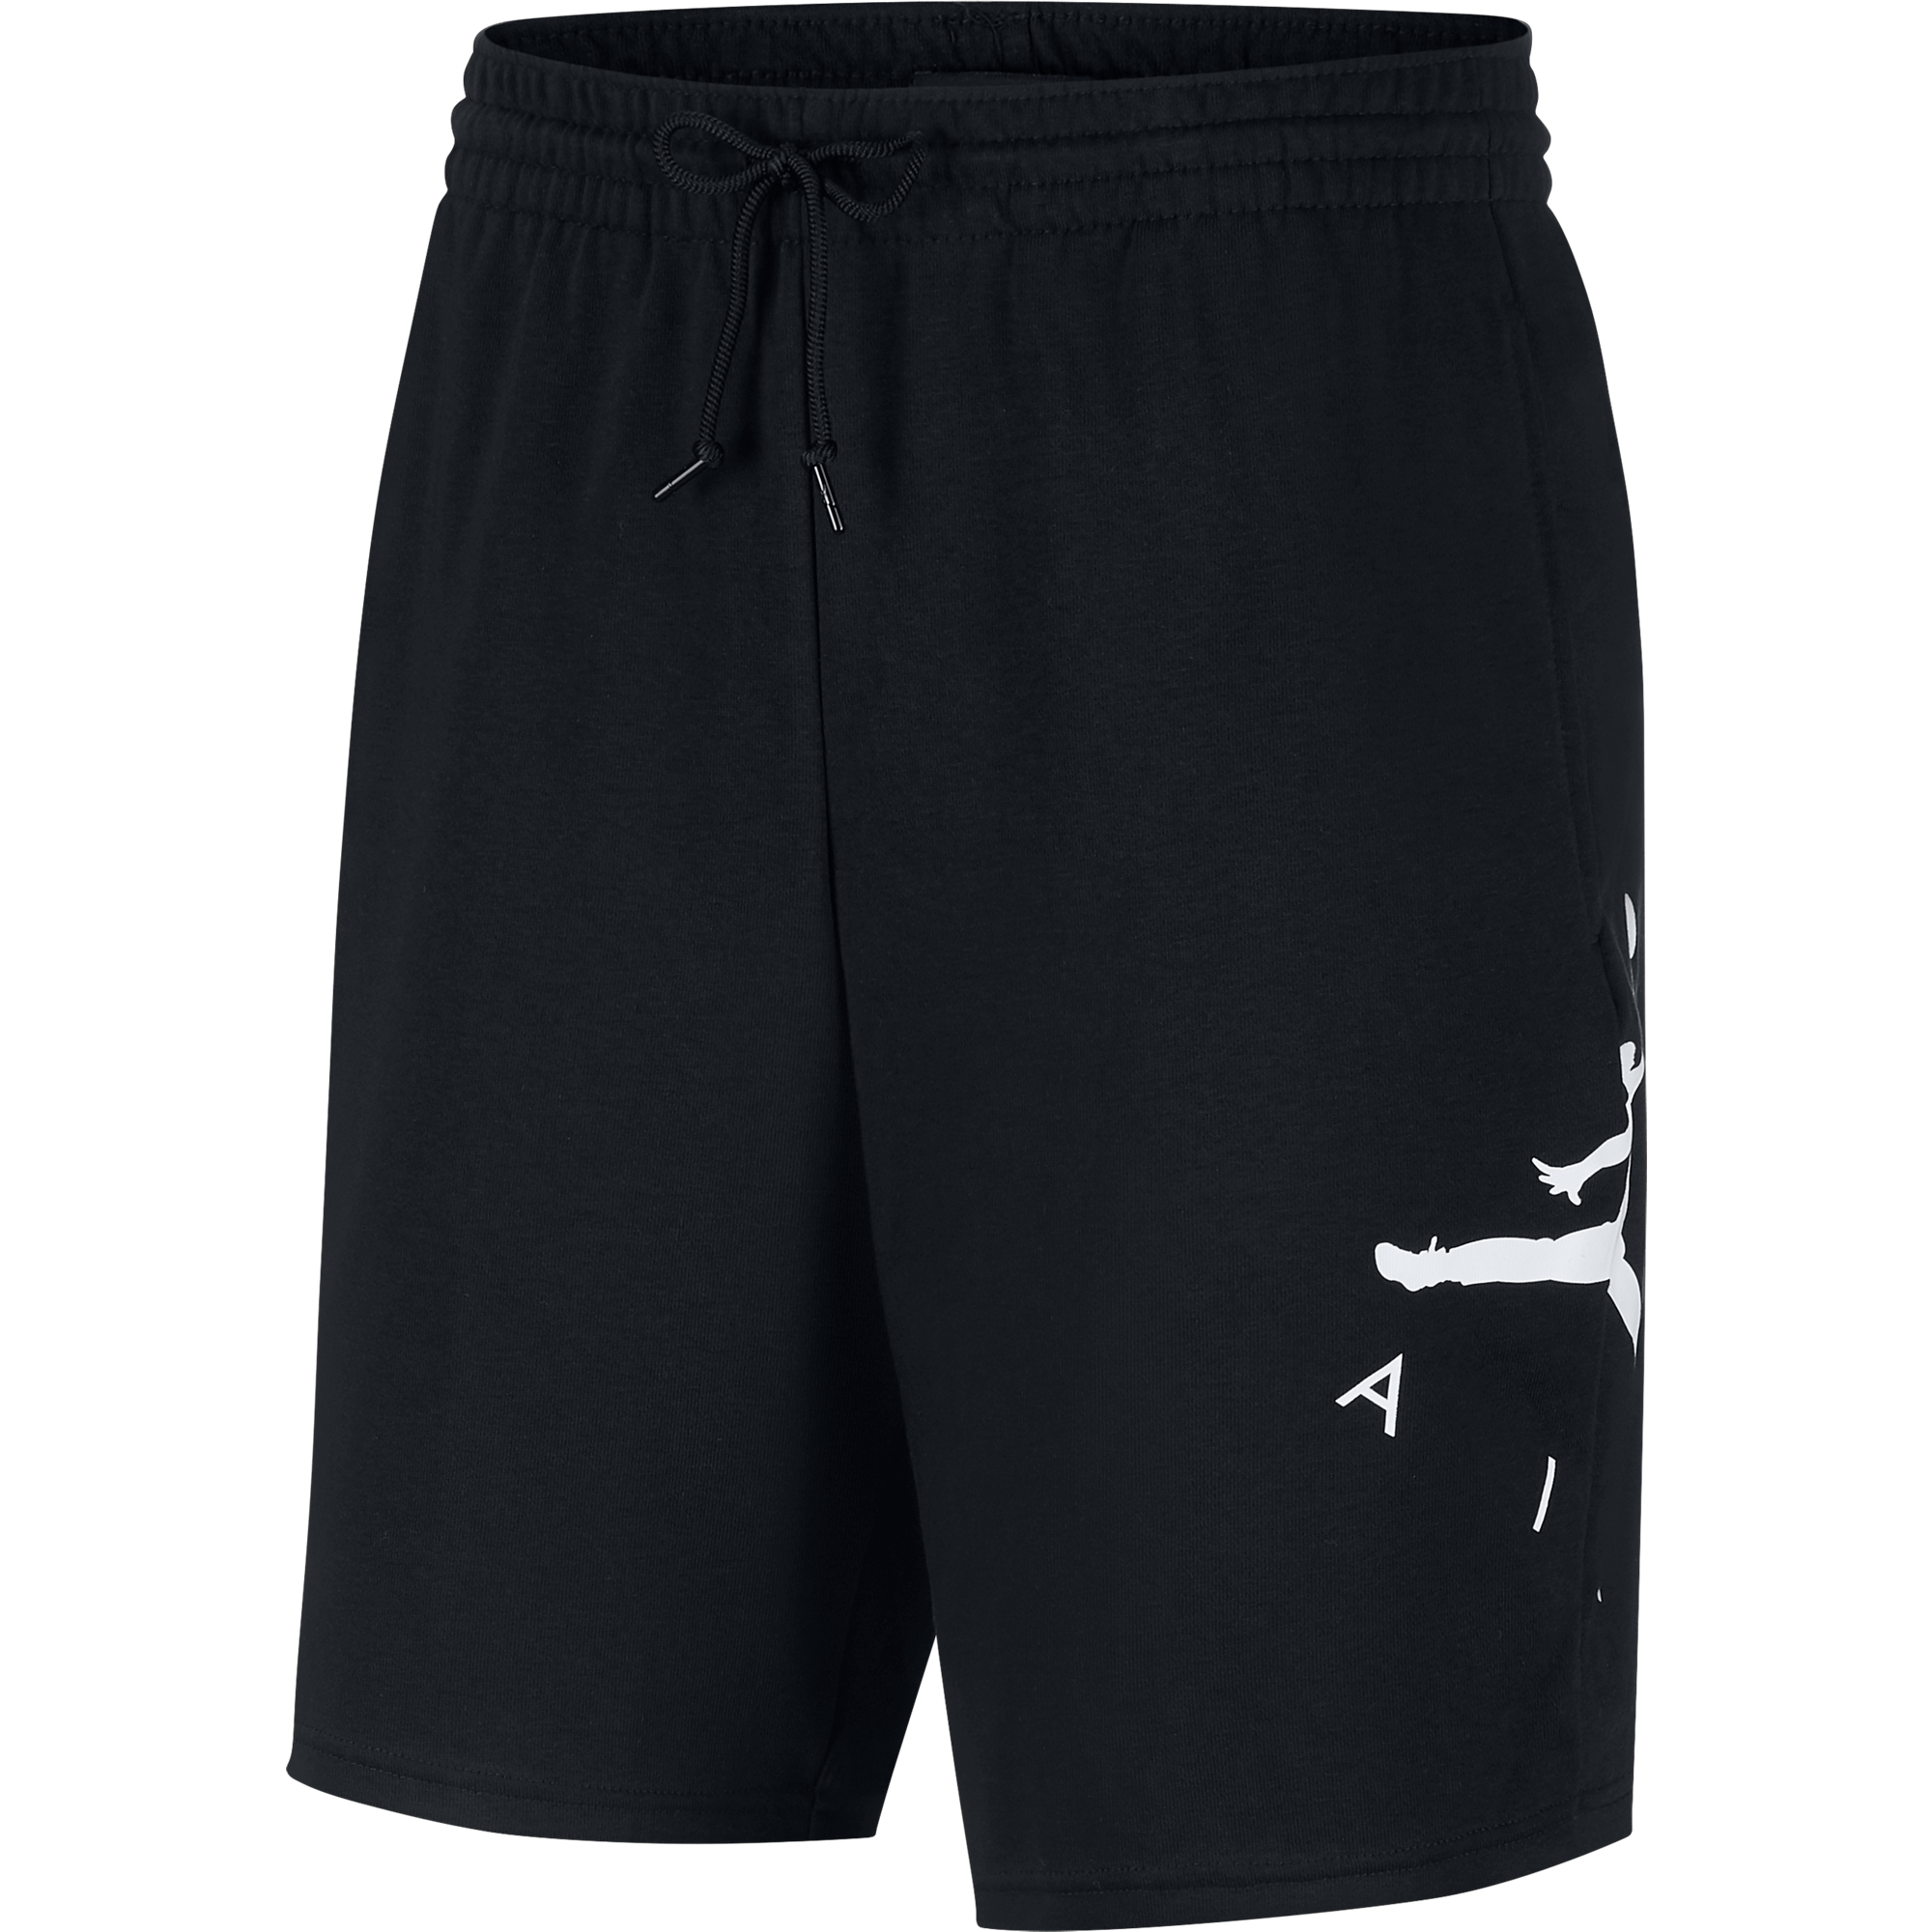 jumpman gfx mesh shorts